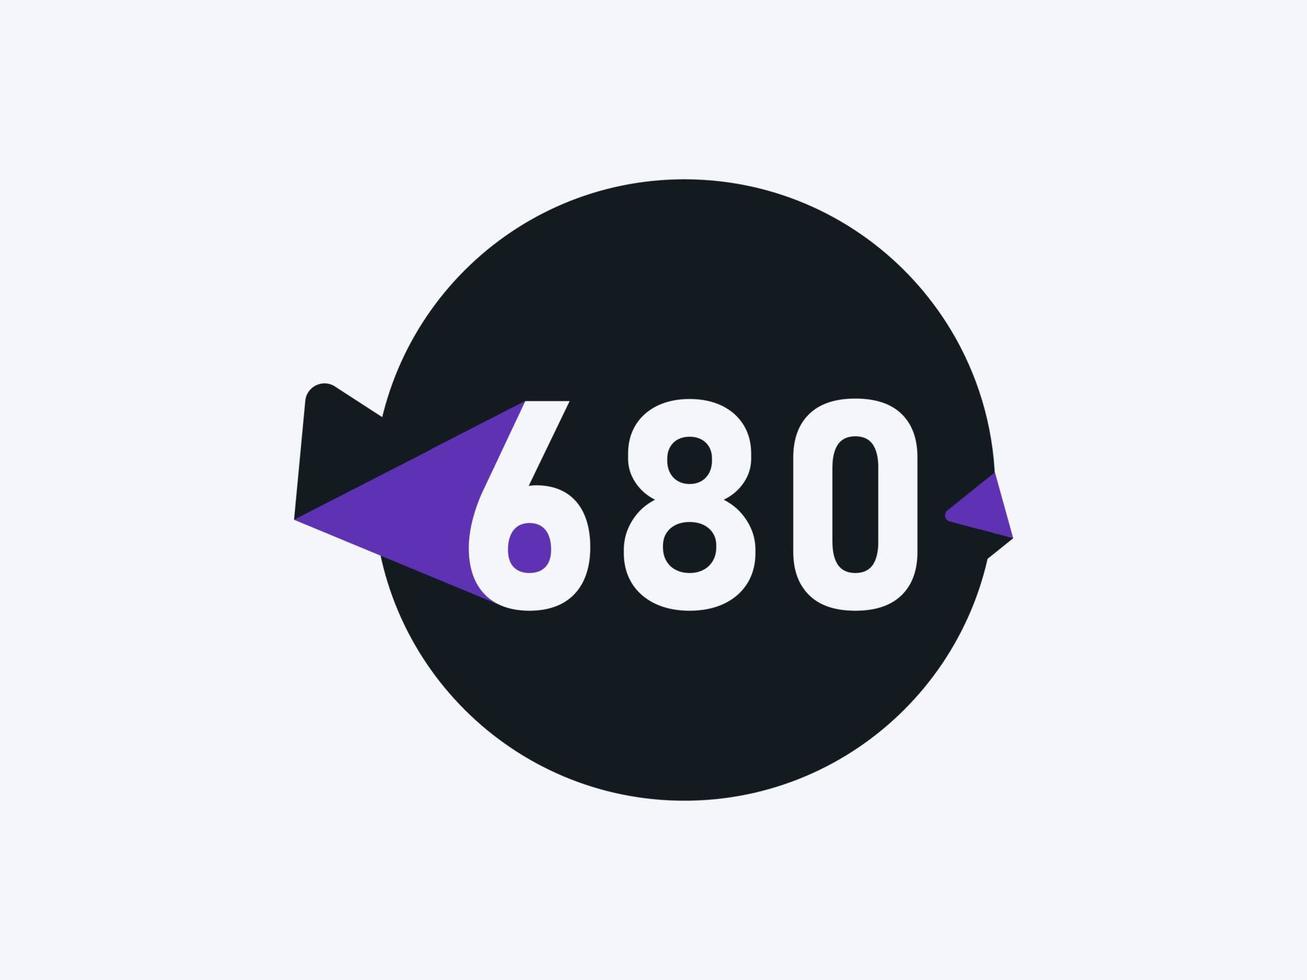 680 Number logo icon design vector image. Number logo icon design vector image